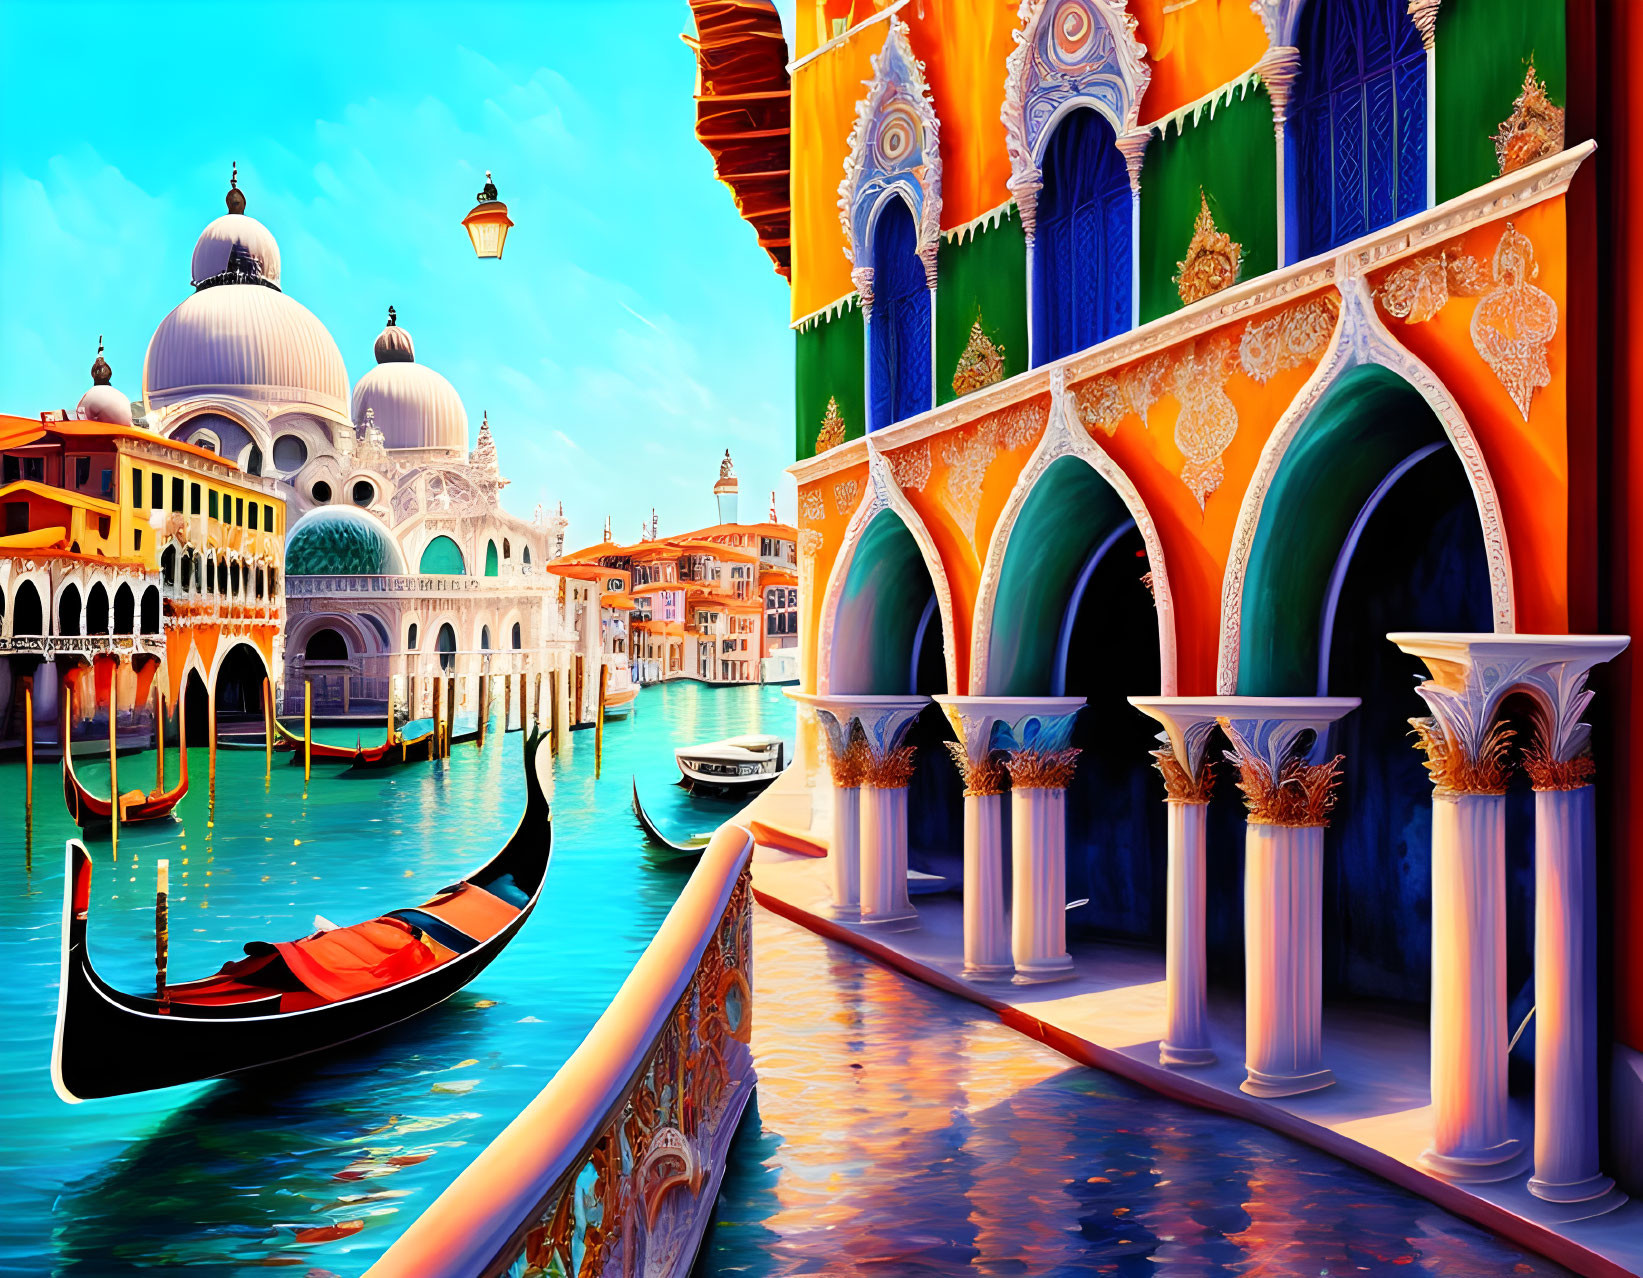 Digital artwork of Venice: gondola, colorful buildings, Basilica di Santa Maria della Salute